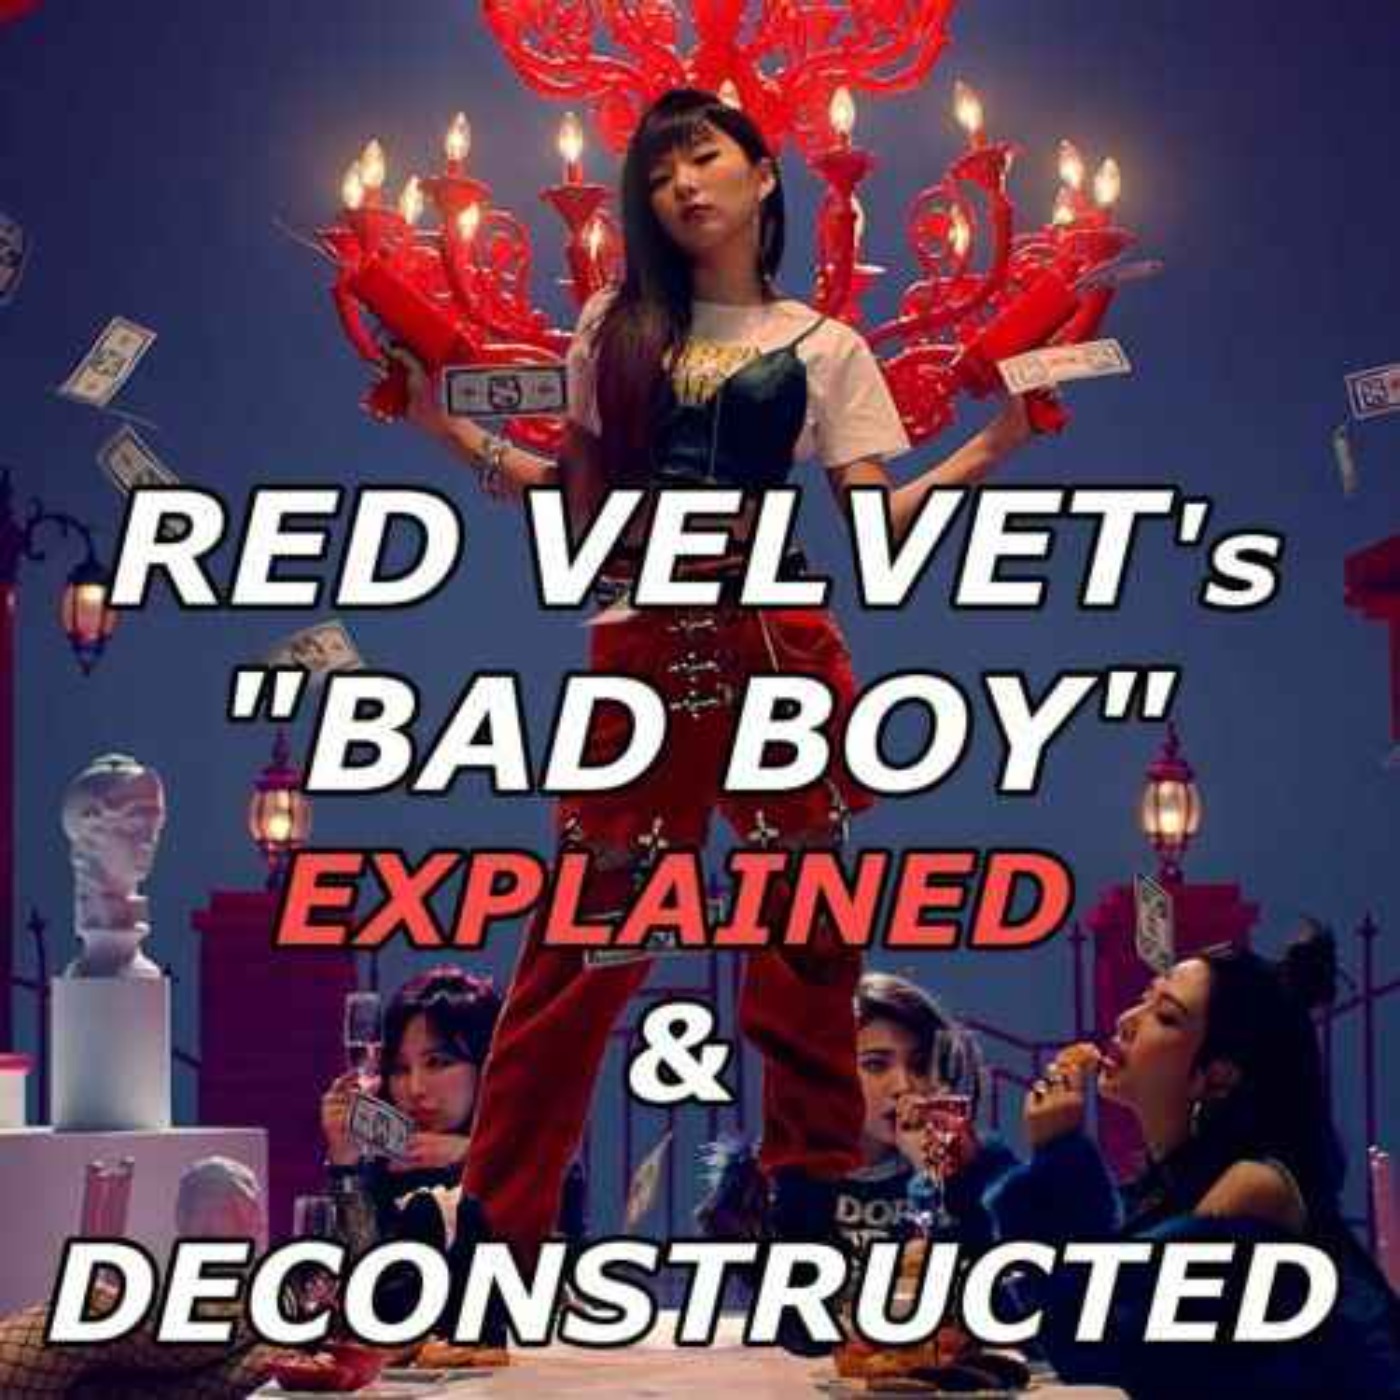 (Rebroadcast) Red Velvet’s ”Bad Boy” Explained & Deconstructed